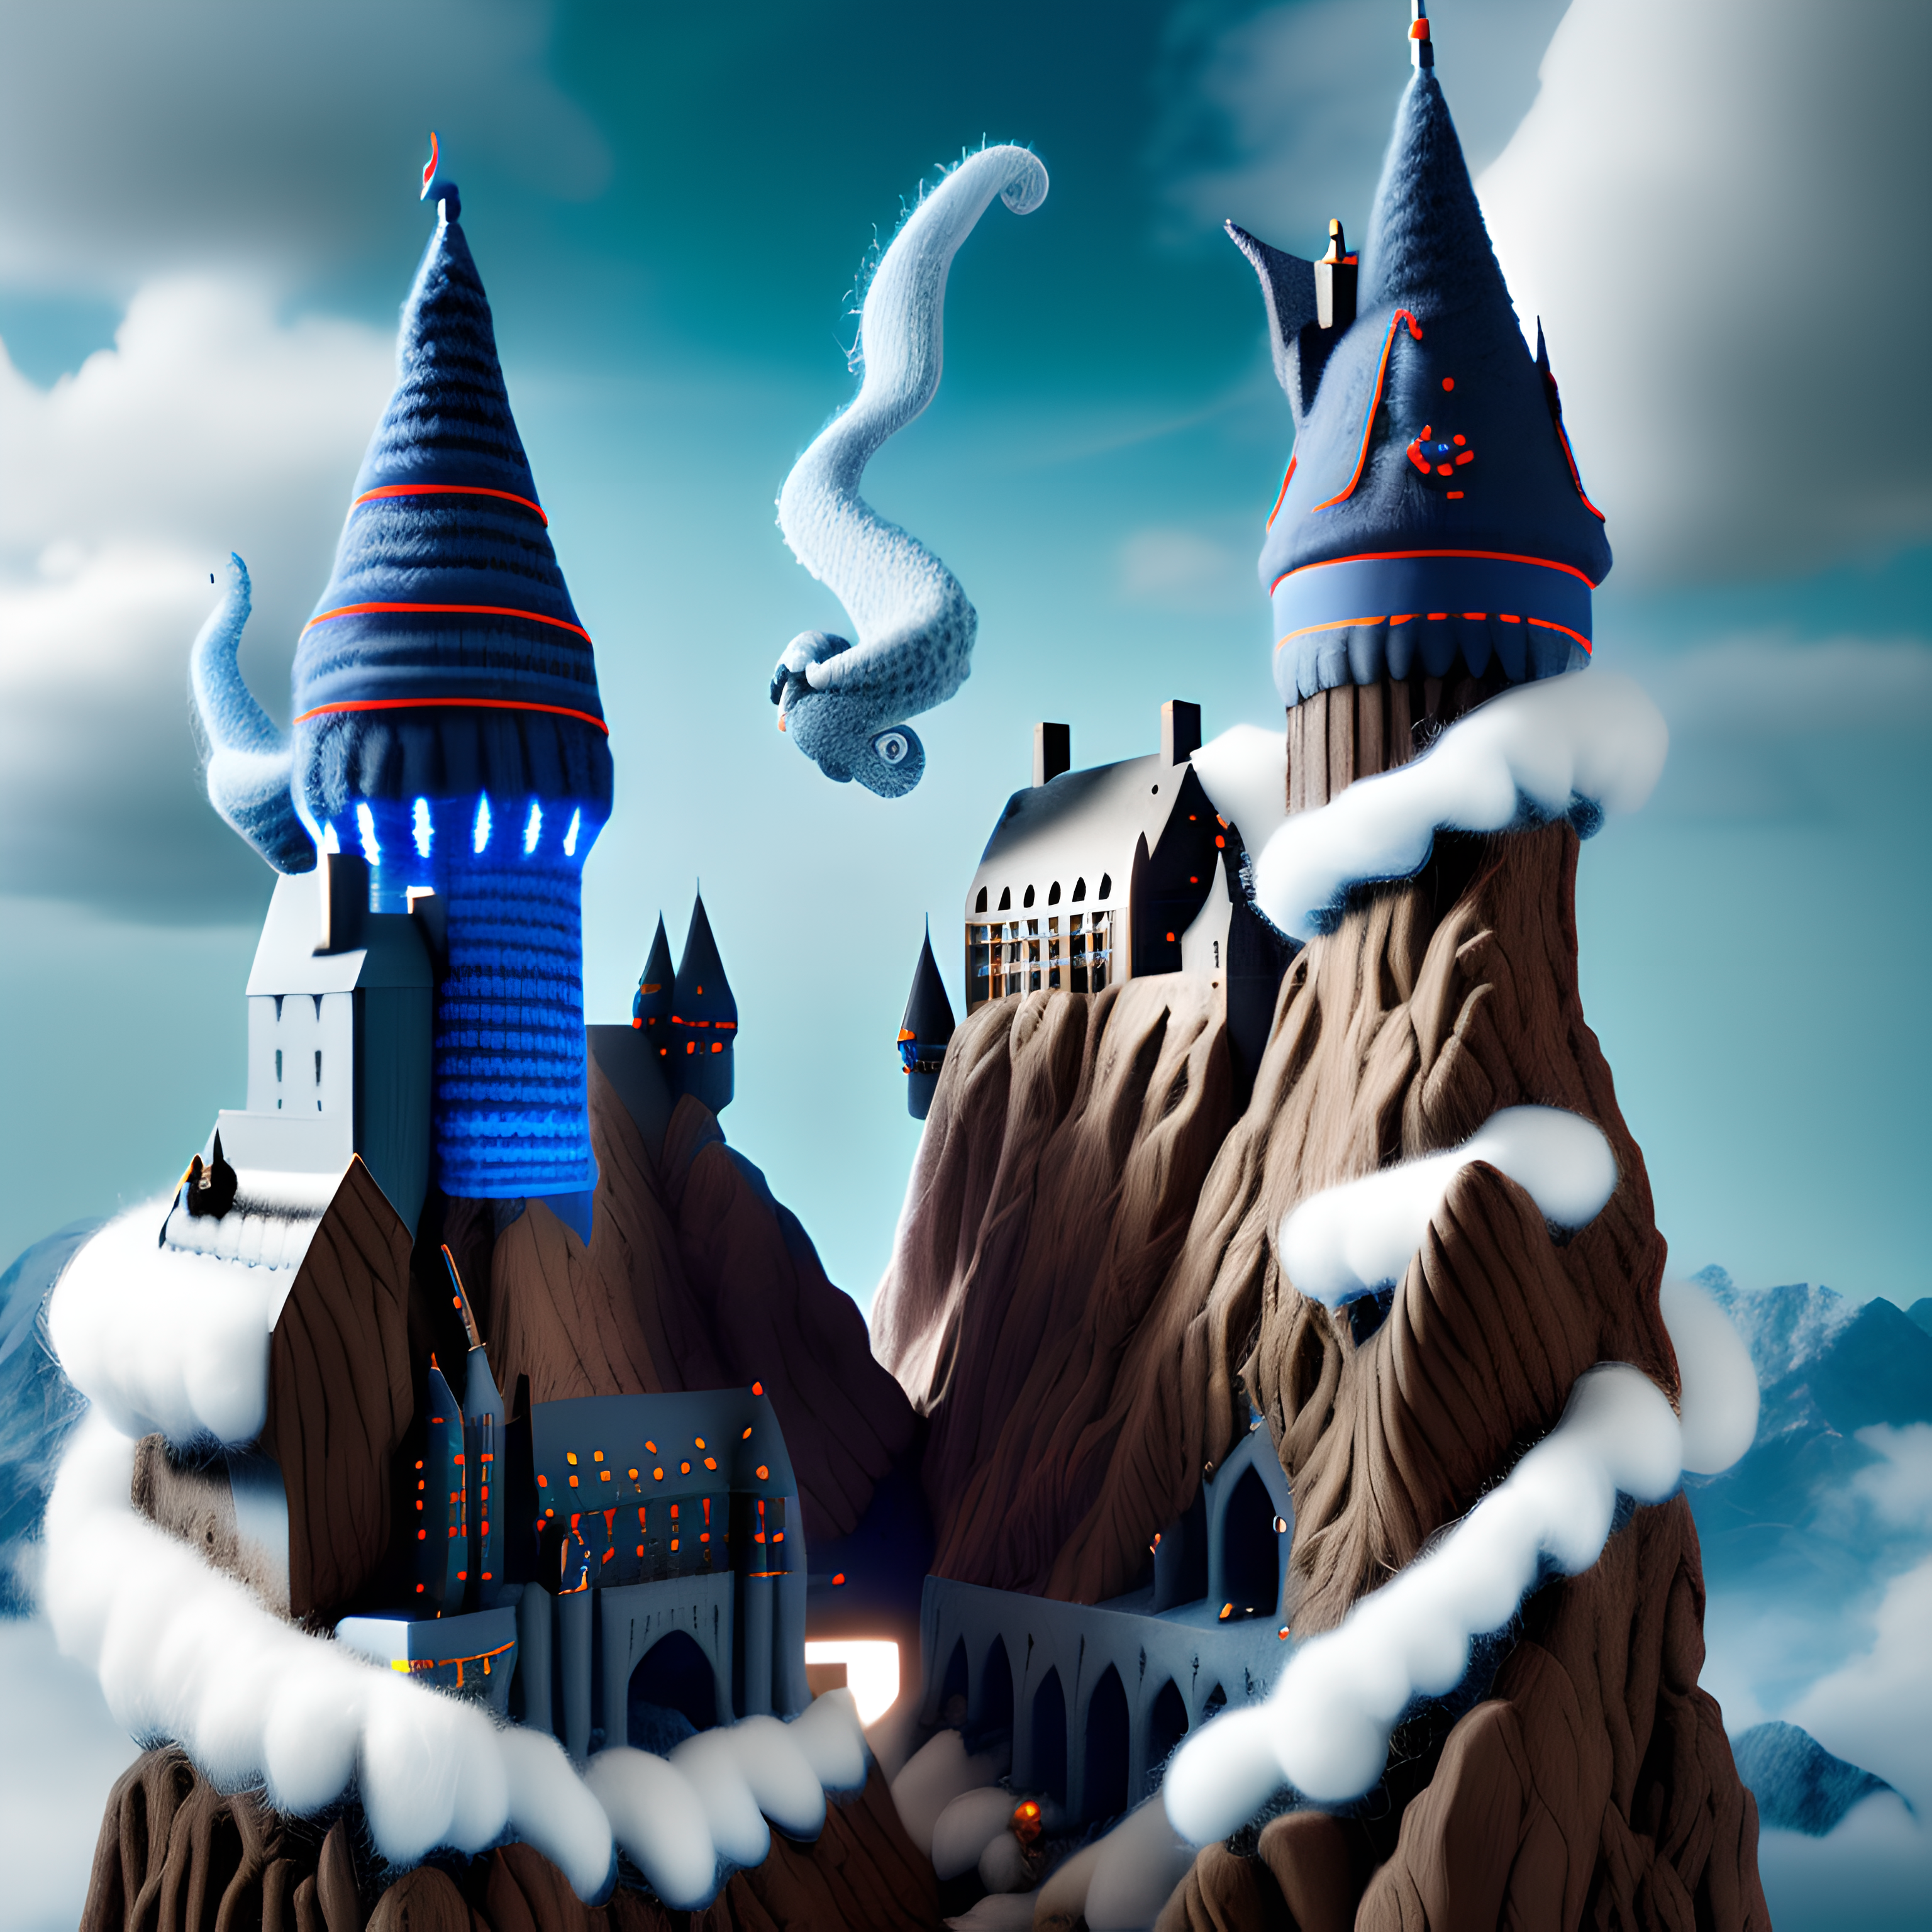 General 3072x3072 Stable Diffusion AI art Blender CGI Hogwarts Harry Potter